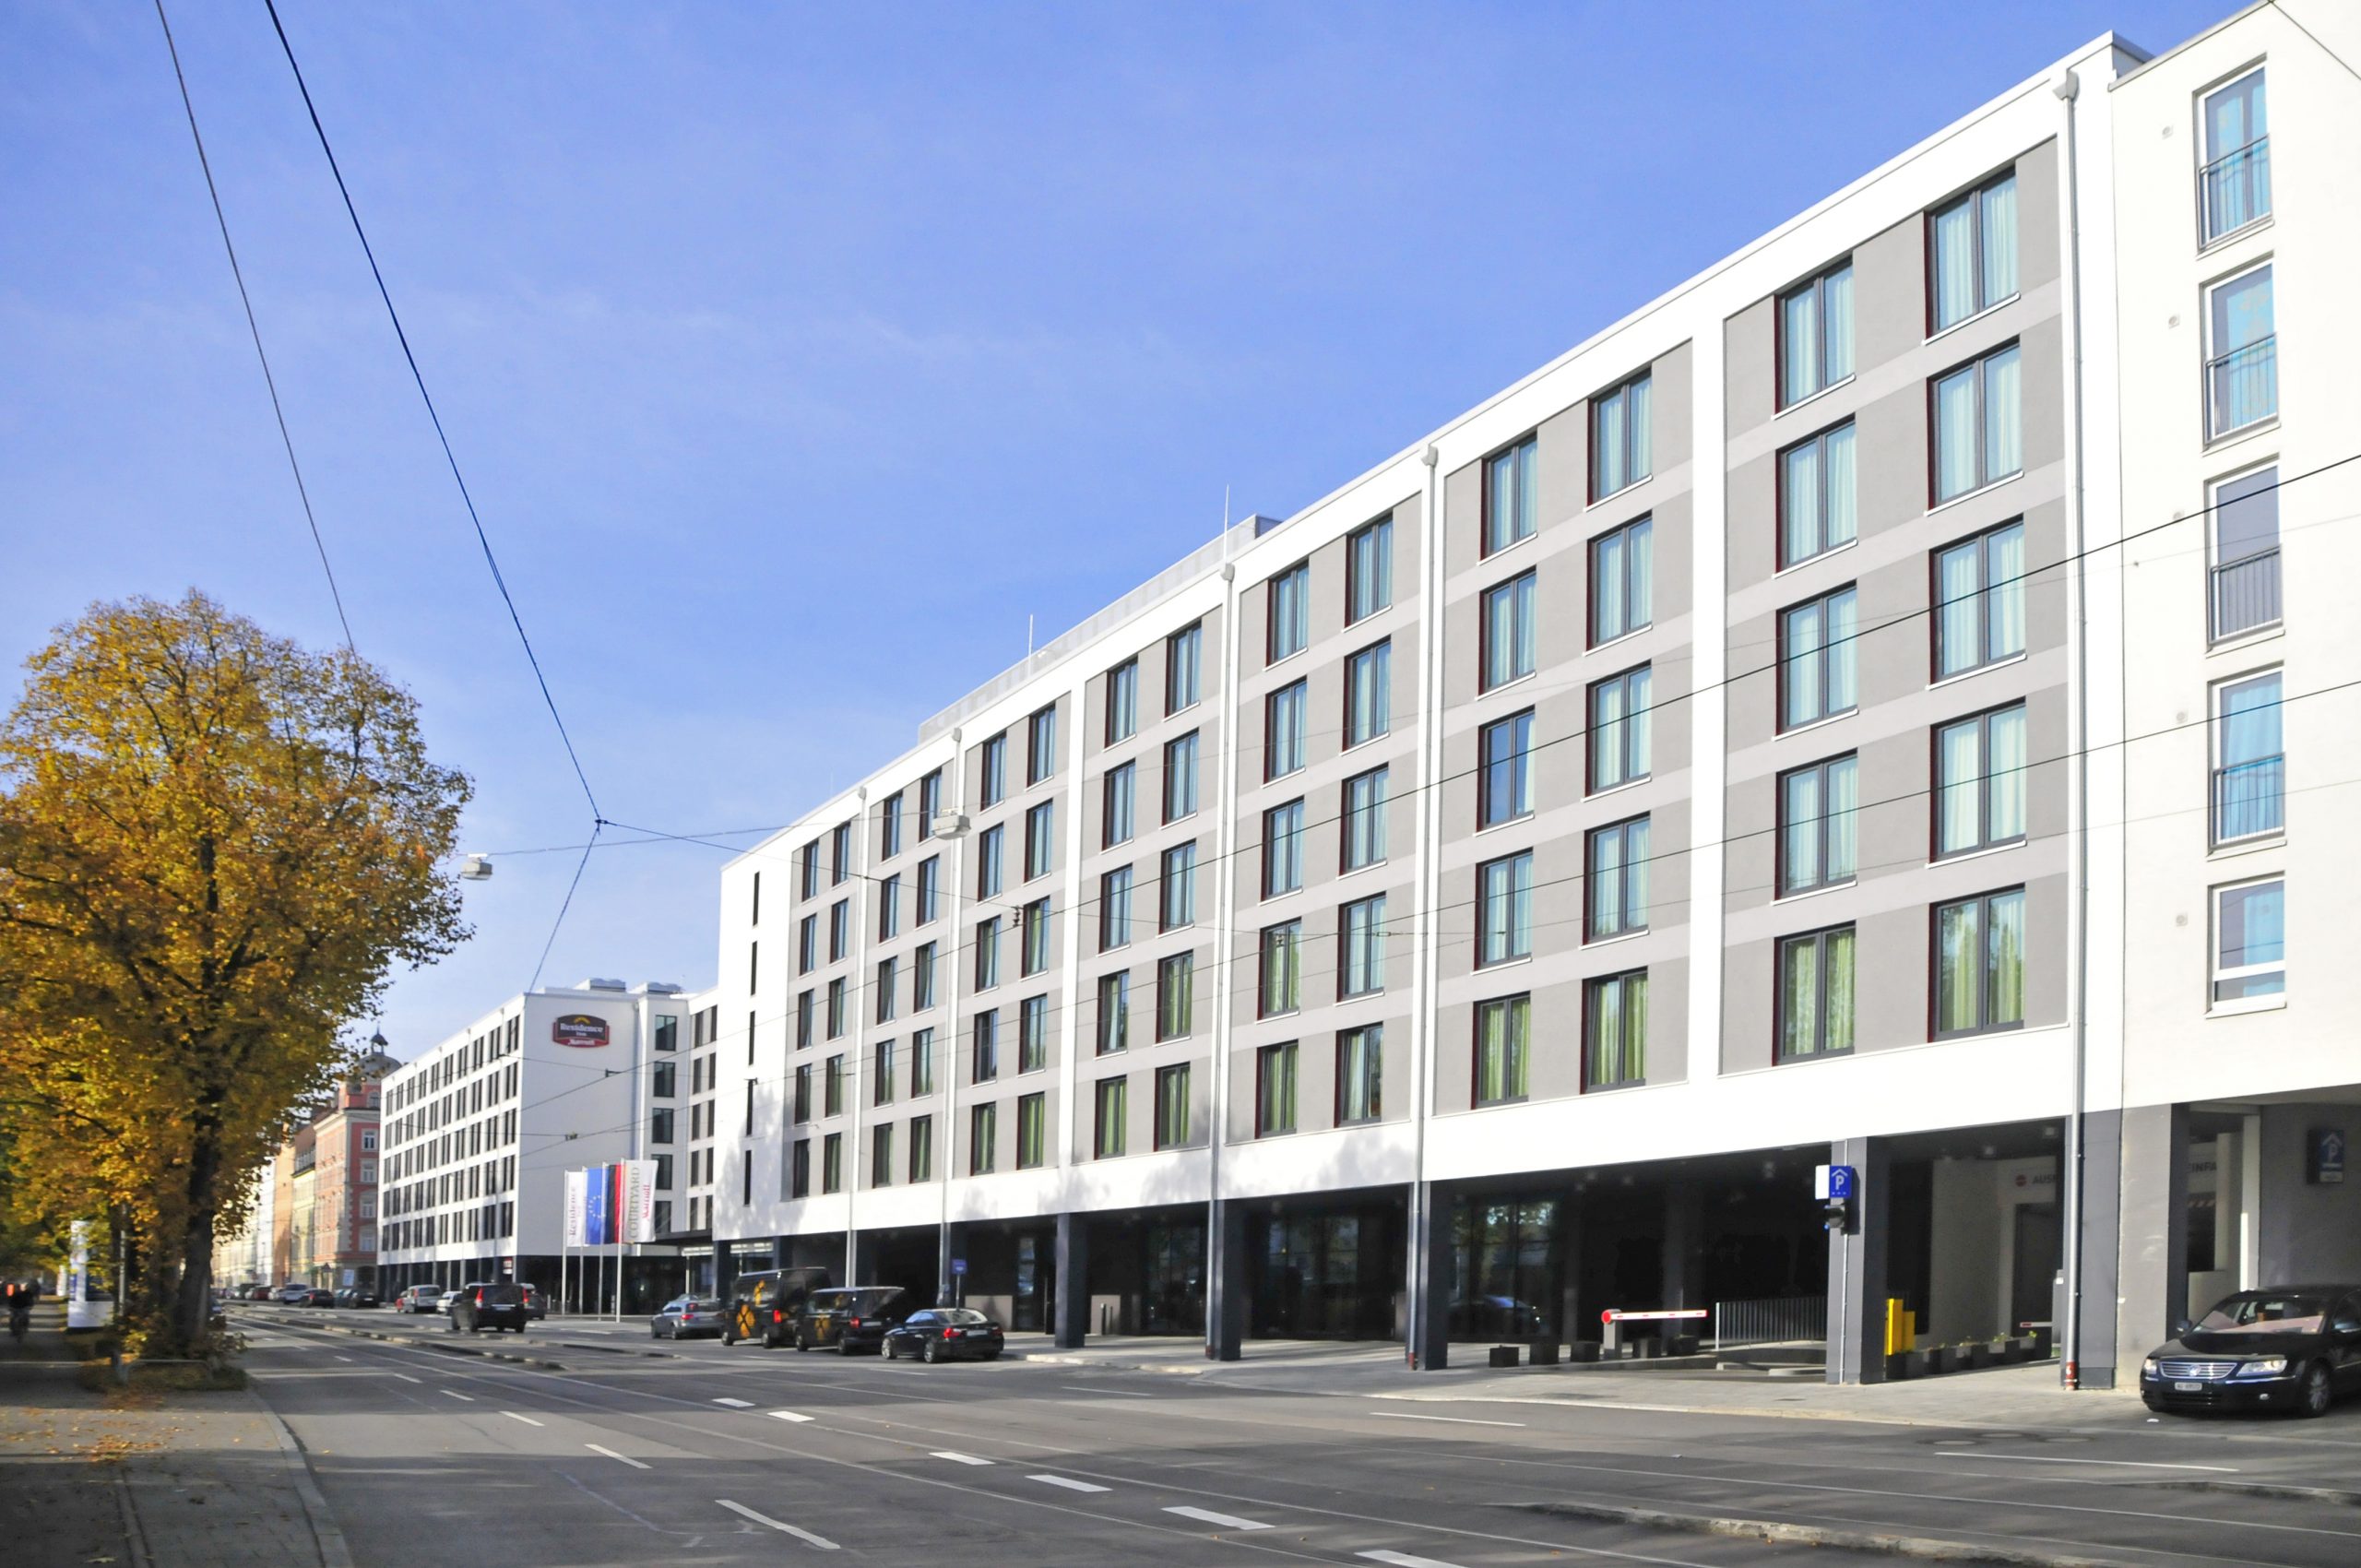 Marriott-Hotel-Fassade-VS-7-scaled